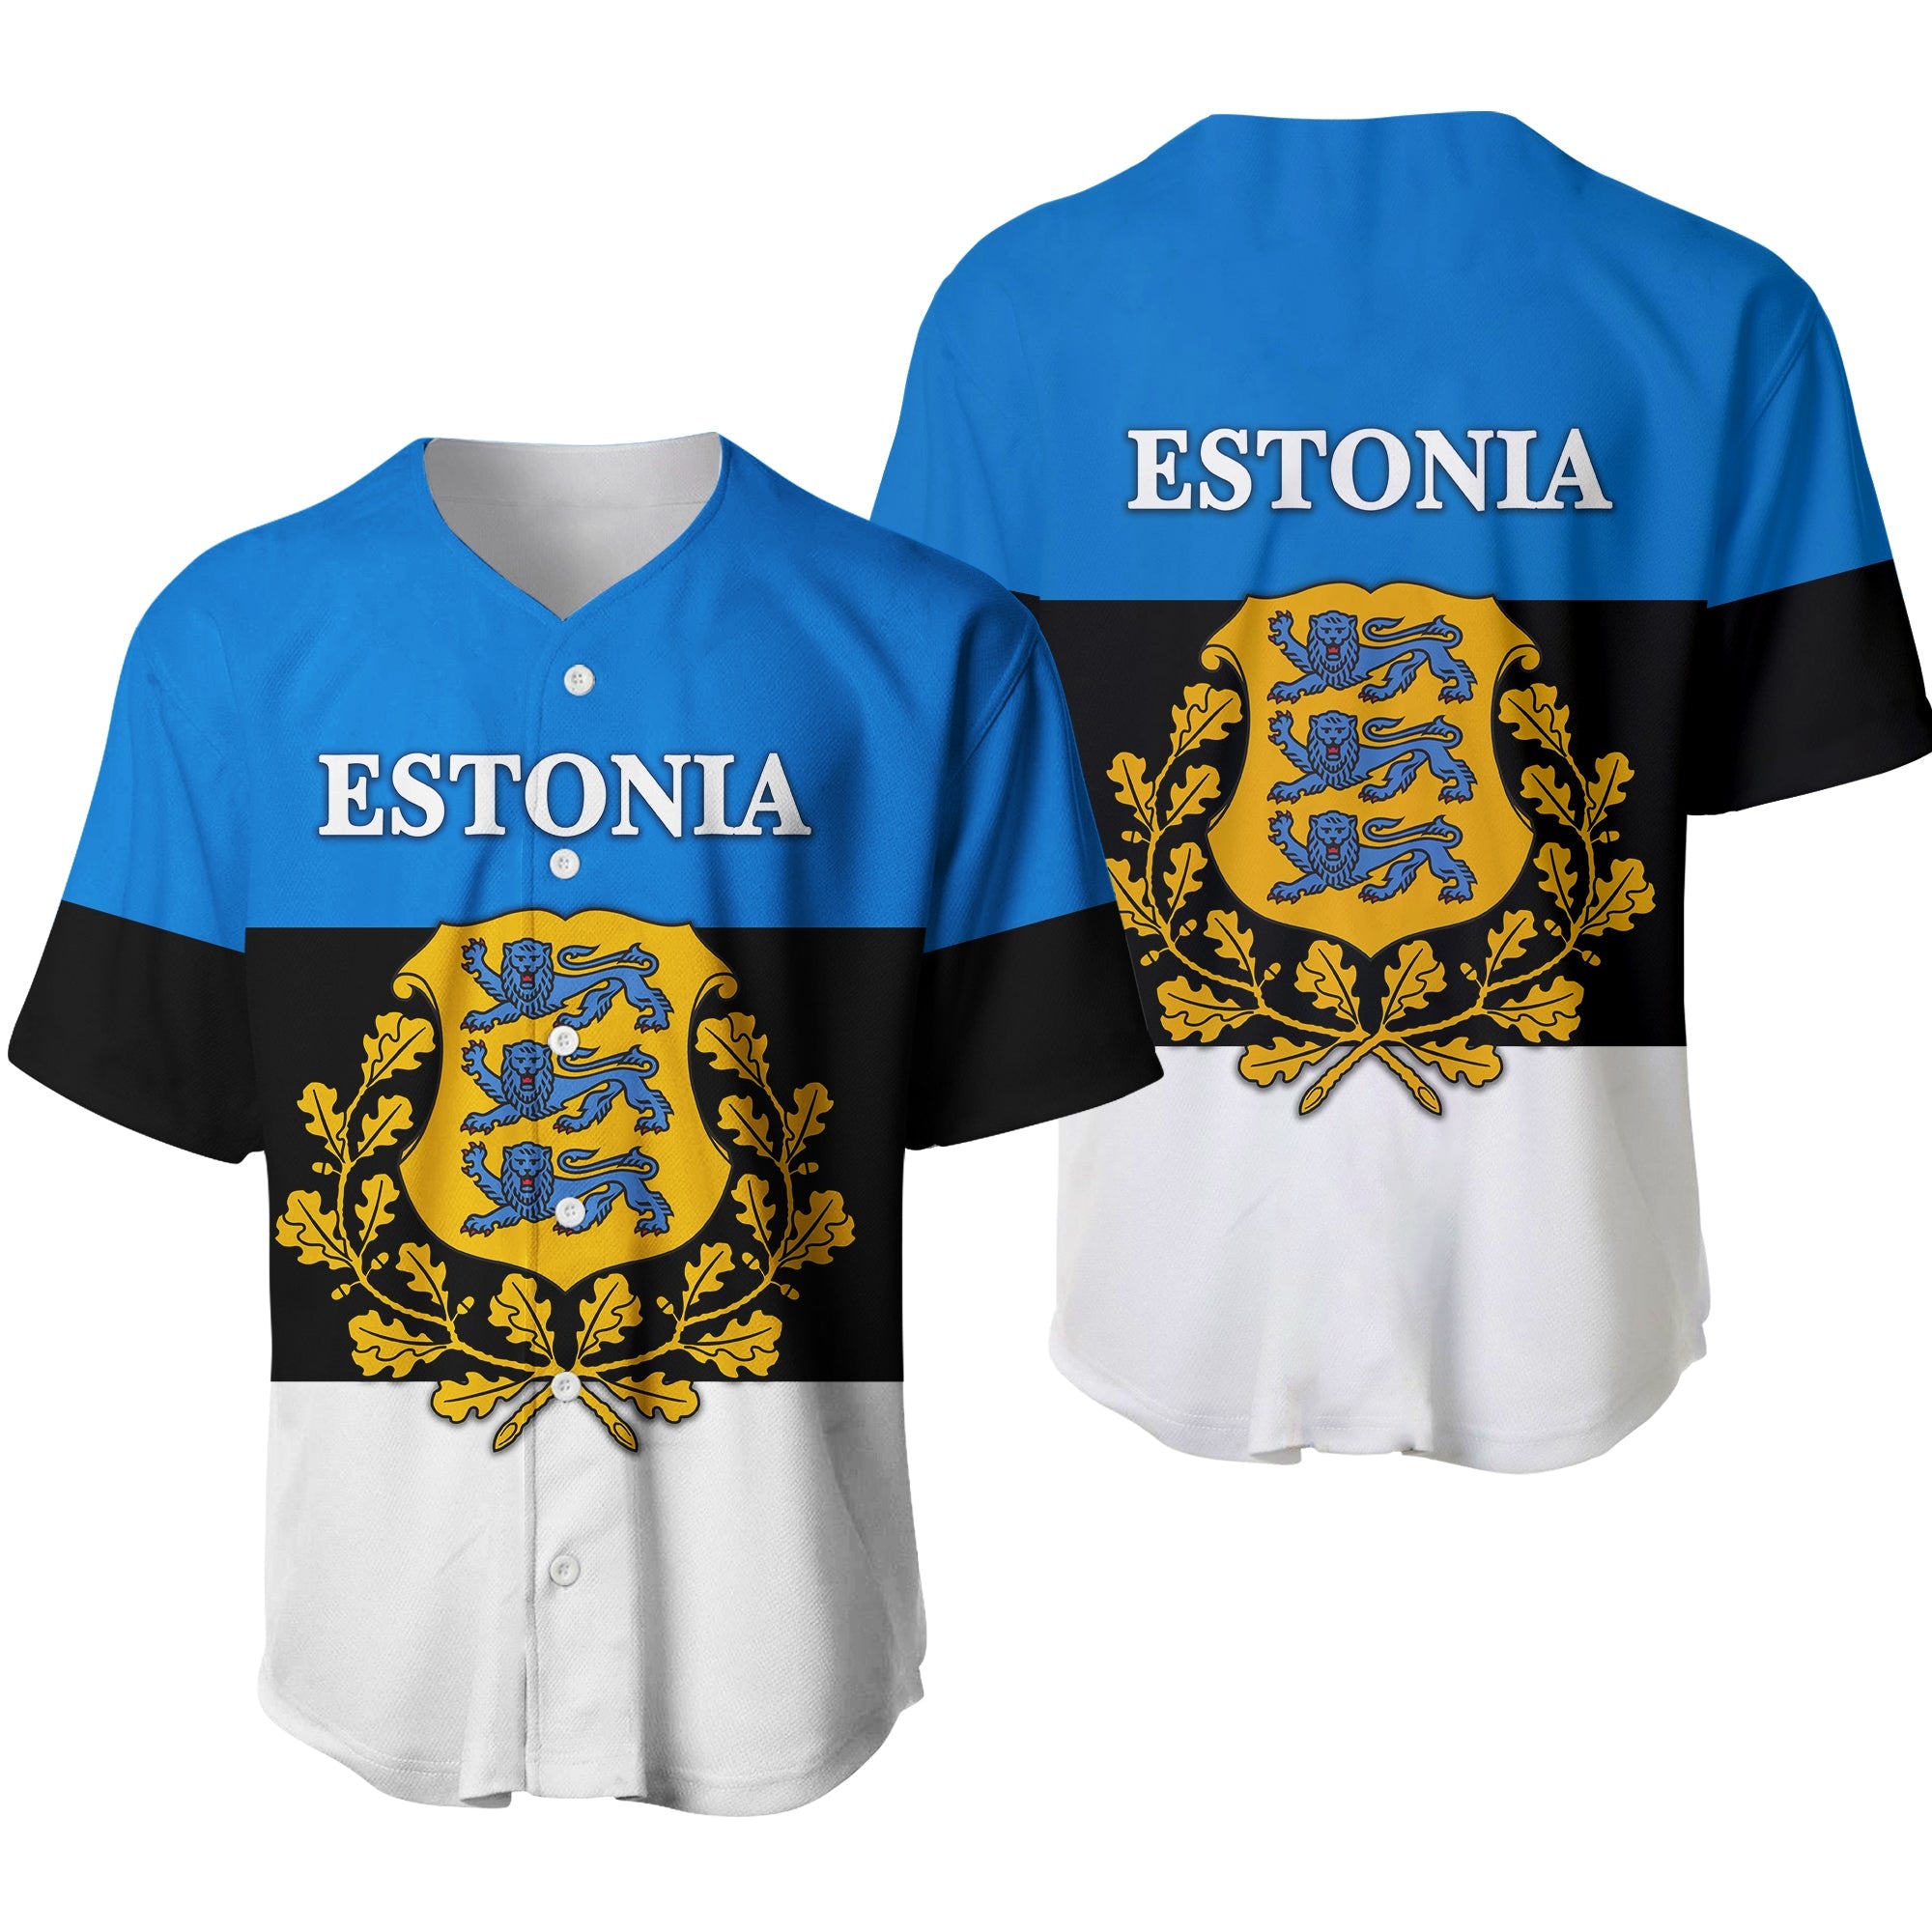 estonia-baseball-jersey-flag-style